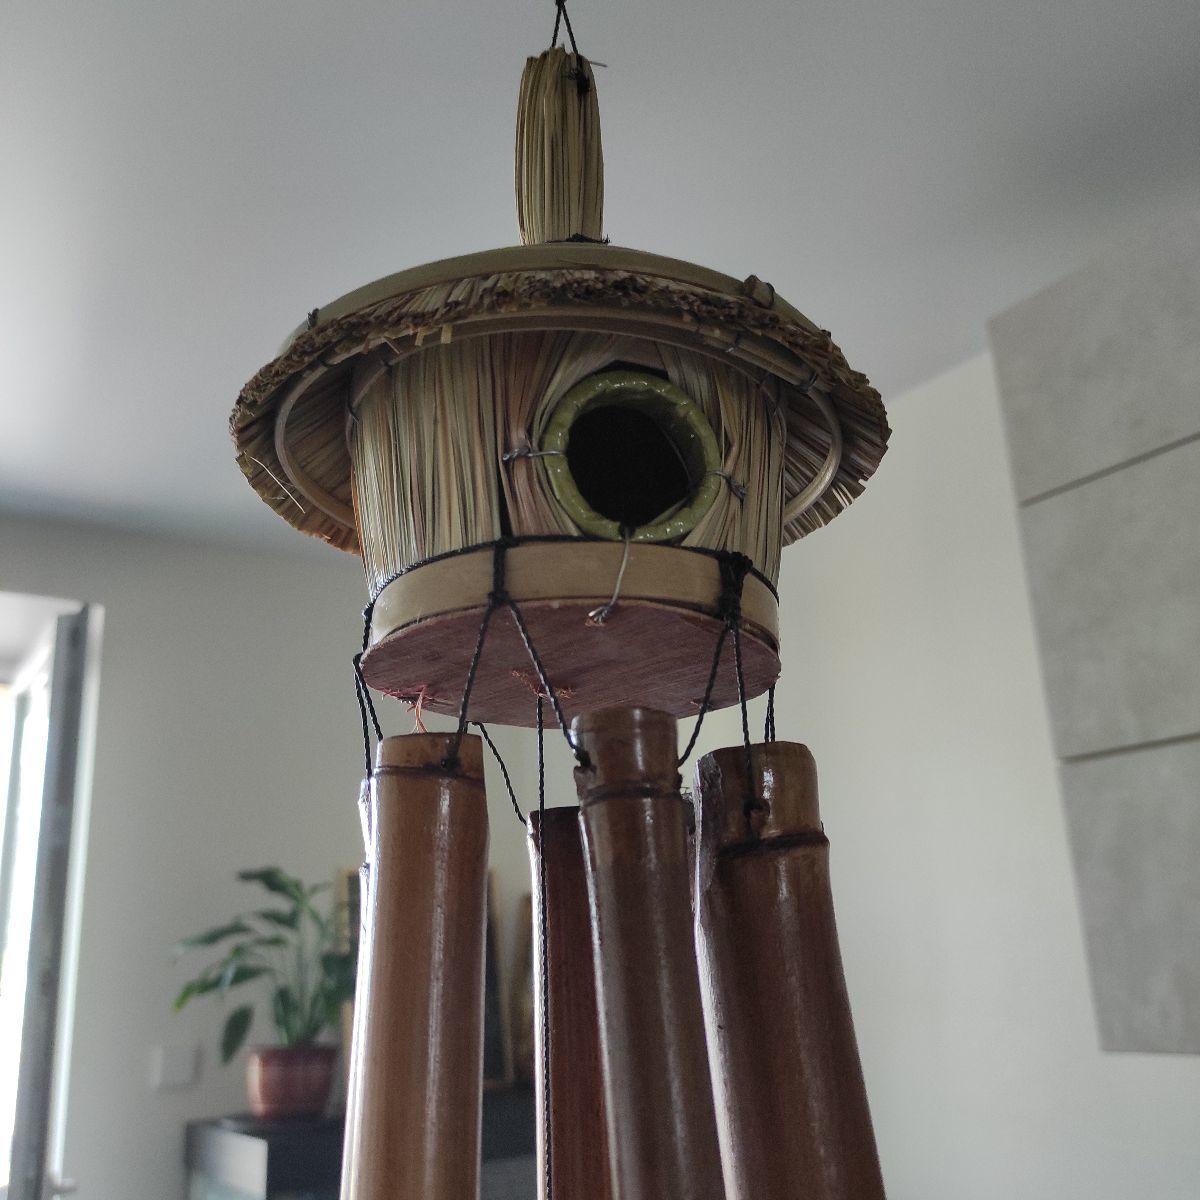 Отзыв на товар: Музыка ветра "Домик" бамбук 40 см. NNB.